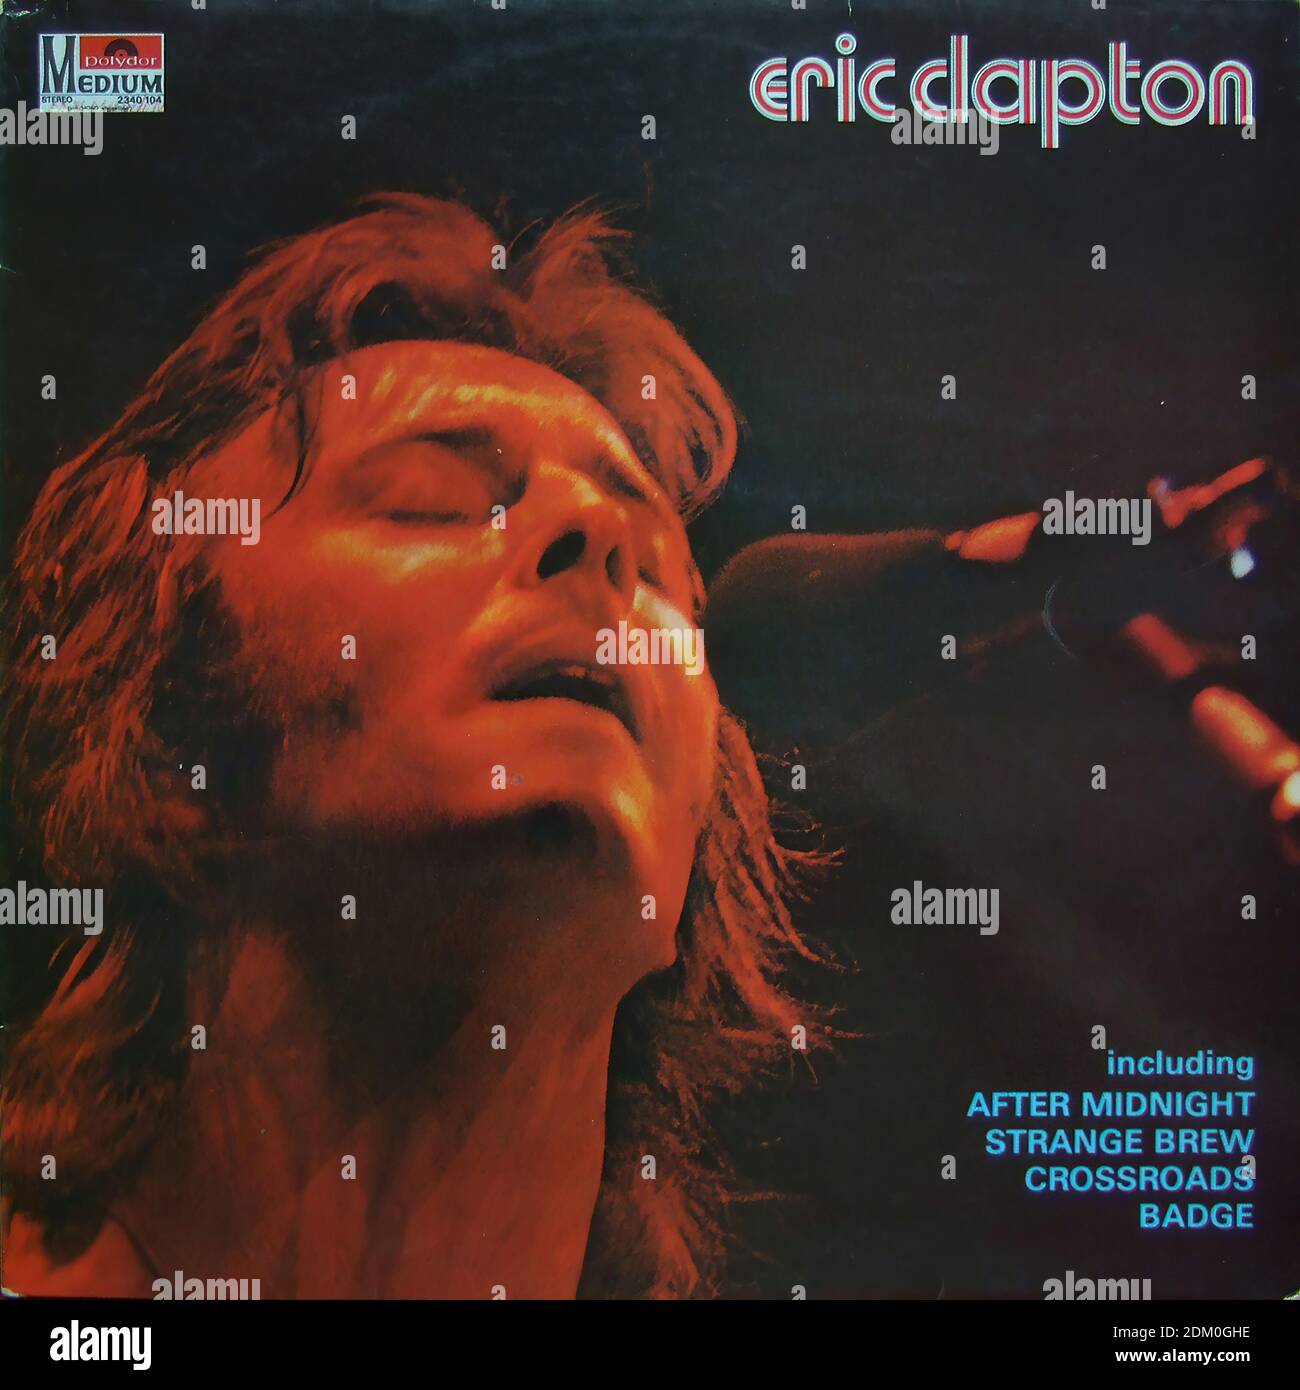 Eric Clapton - incl. After Midnight, Strange Brew, Crossroads, Badge, Polydor Medium - copertina dell'album in vinile d'epoca Foto Stock